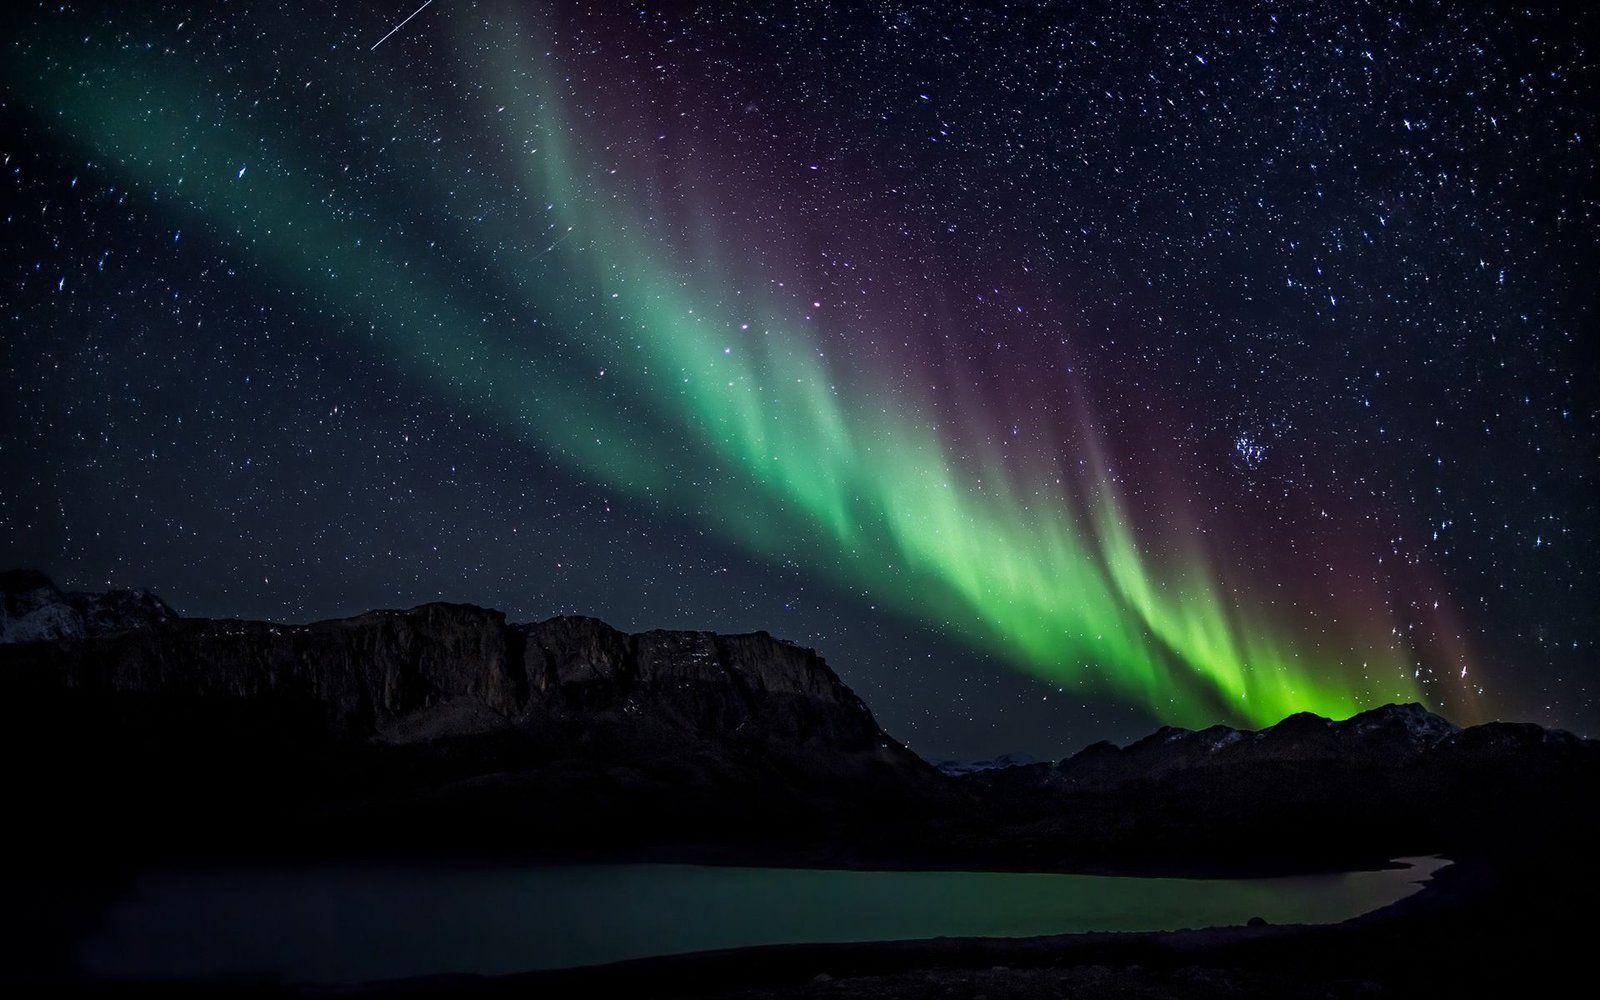 Aurora Borealis The Wonderful Light In The North Poles Sky